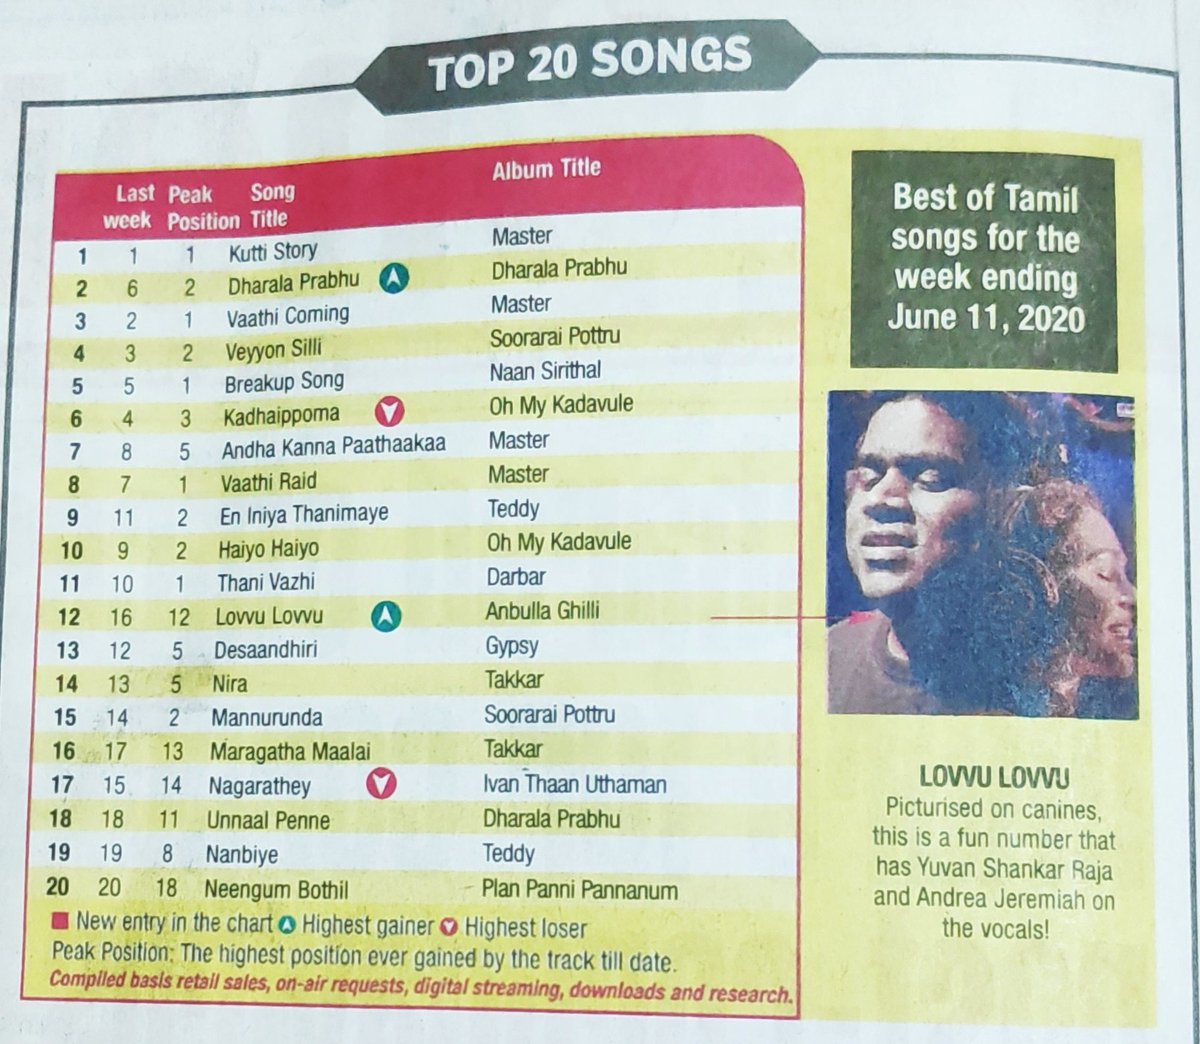 #KuttiStory from #Thalapathy #Vijay's #Master tops the charts followed by songs from #DharalaPrabhu #SooraraiPottru #NaanSirithal #OhMyKadavule #Teddy #Darbar #AnbullaGhilli #Gypsy #Takkar #IvanThaanUthaman #PlanPanniPannanum